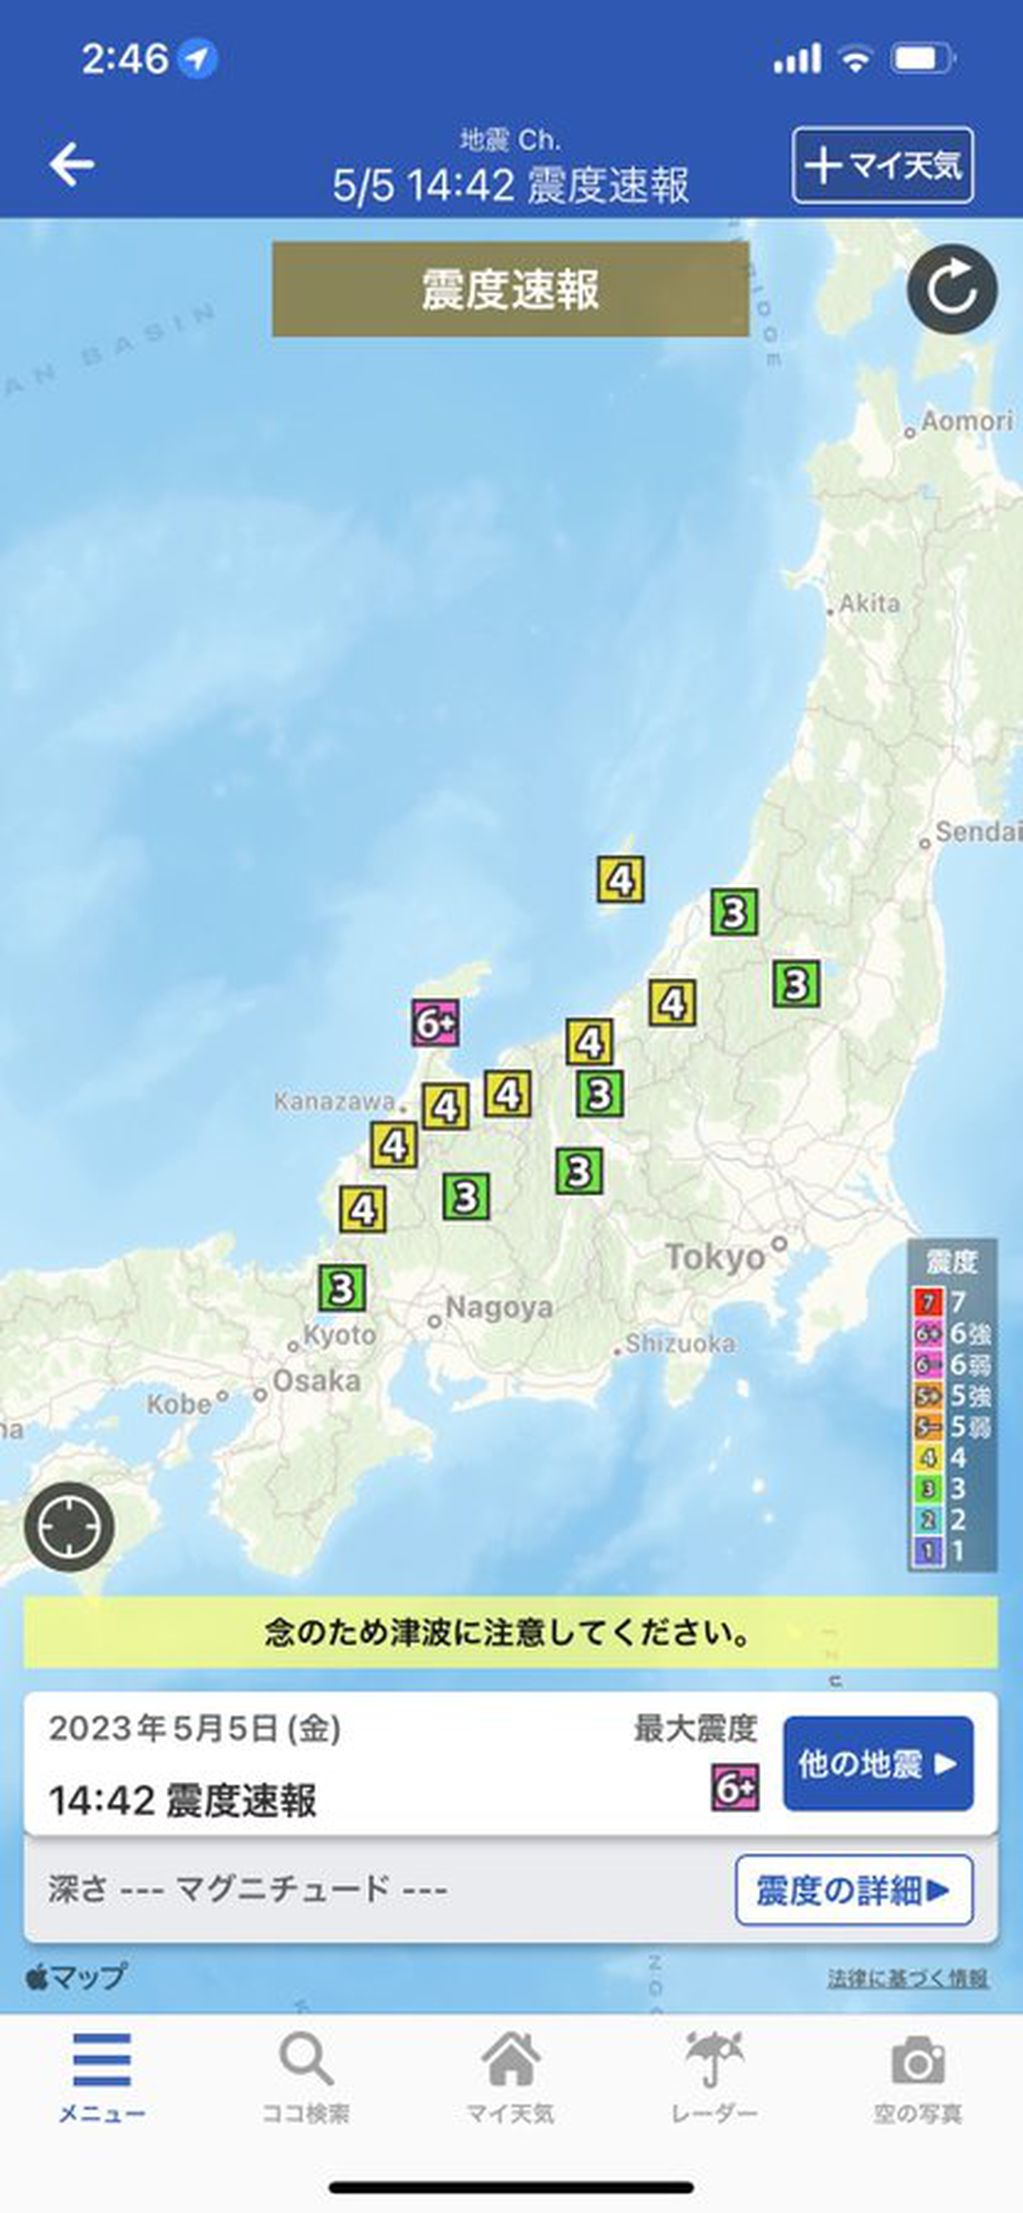 El sismo se registró en la región de Ishikawa. Foto: Twitter/@Struan_Tokyo